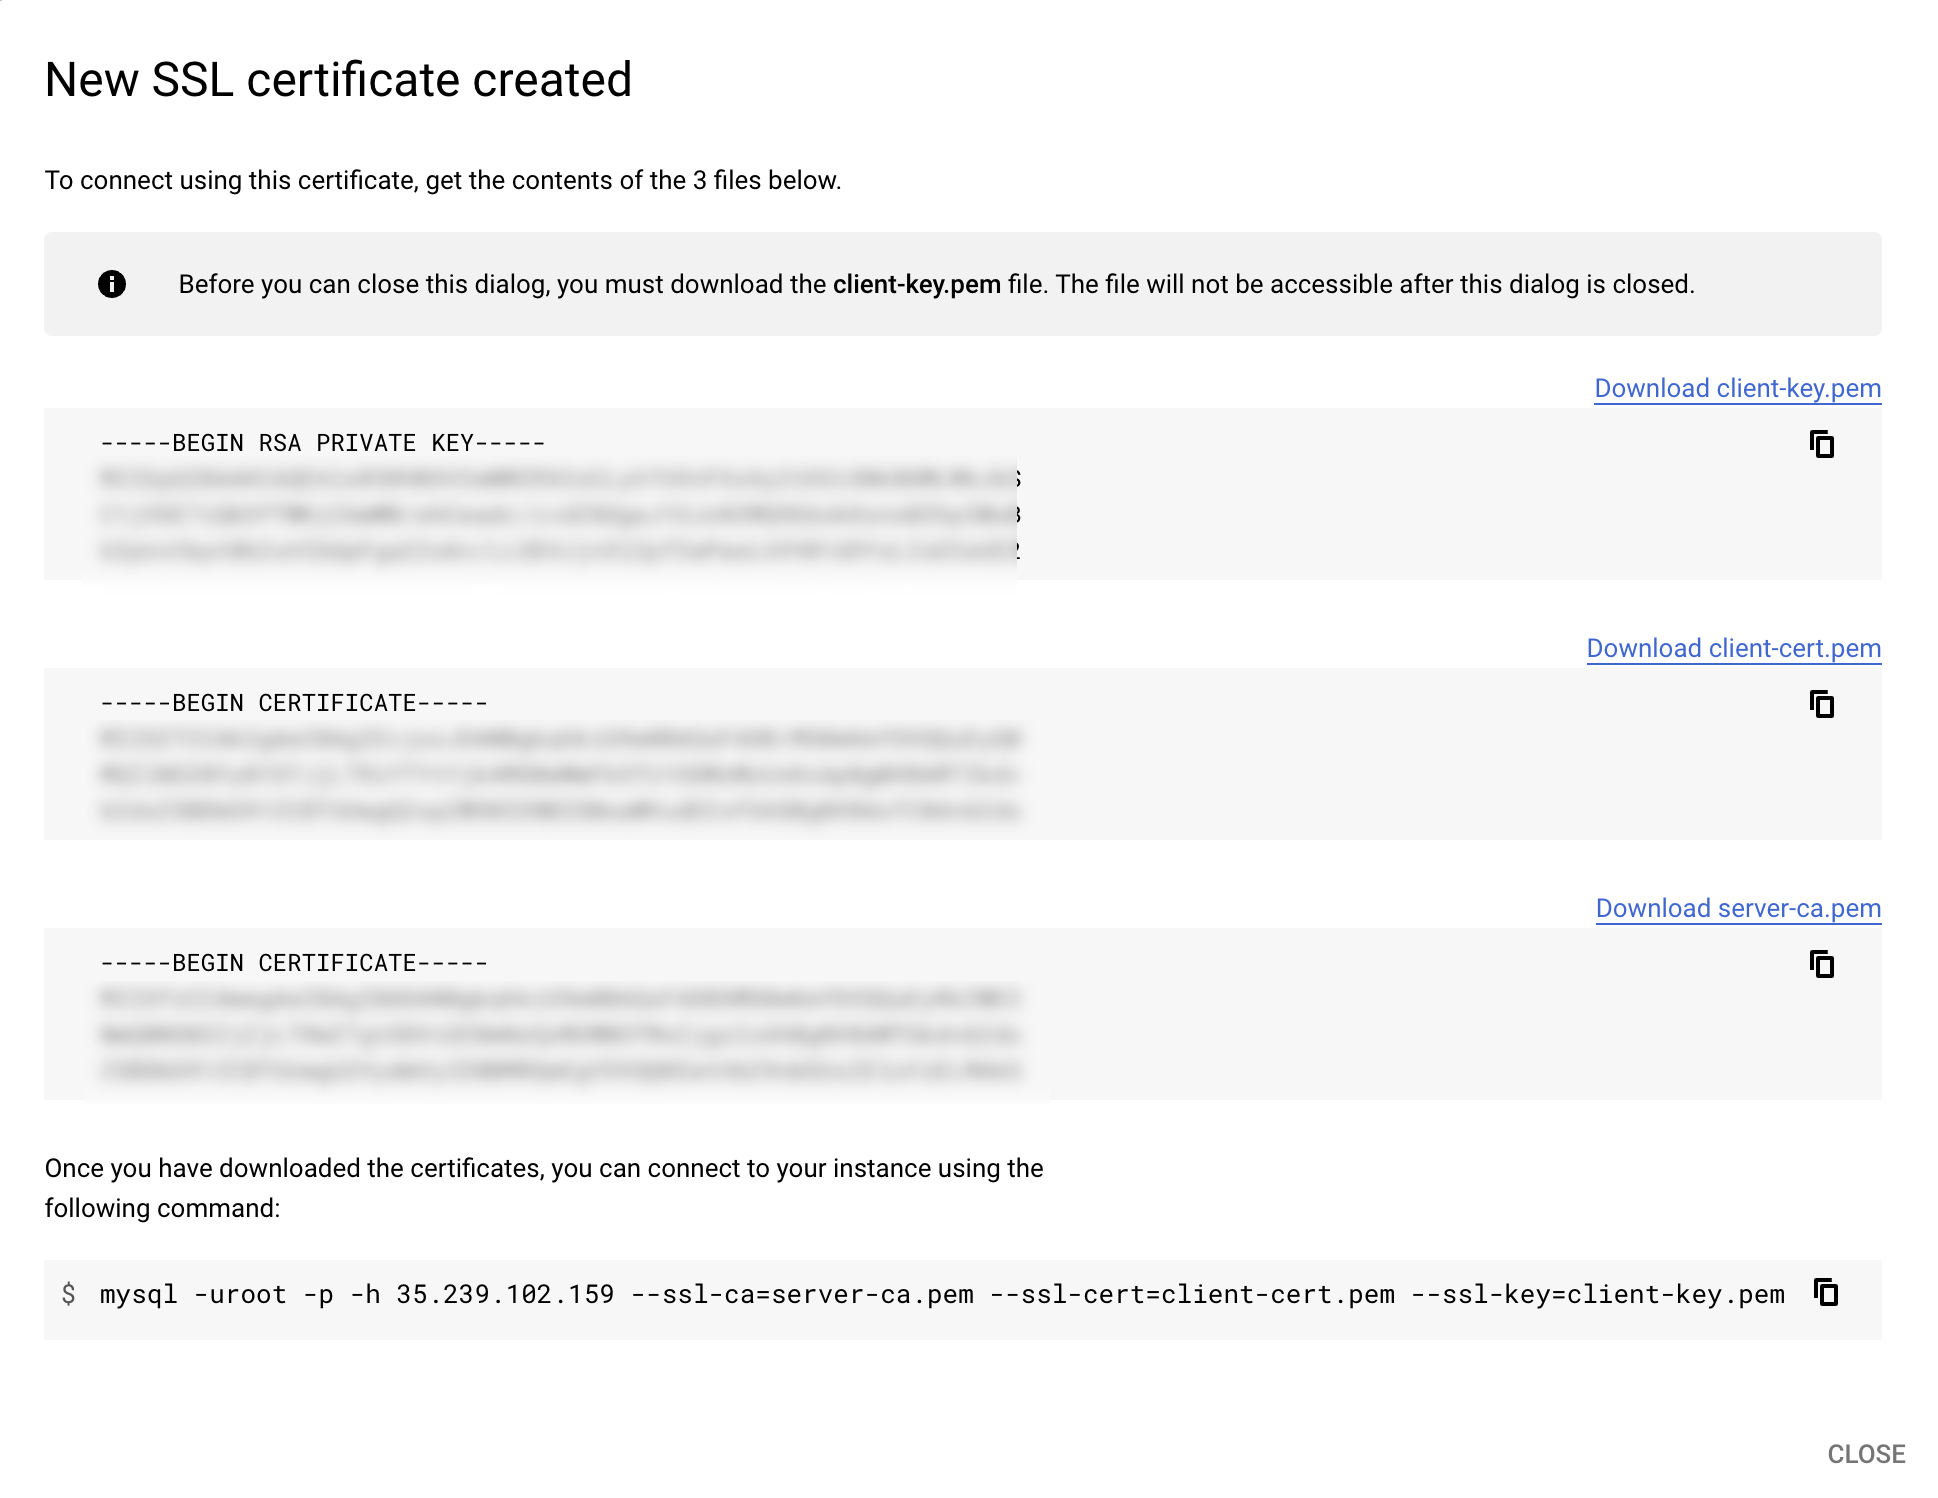 Downloading client credentials